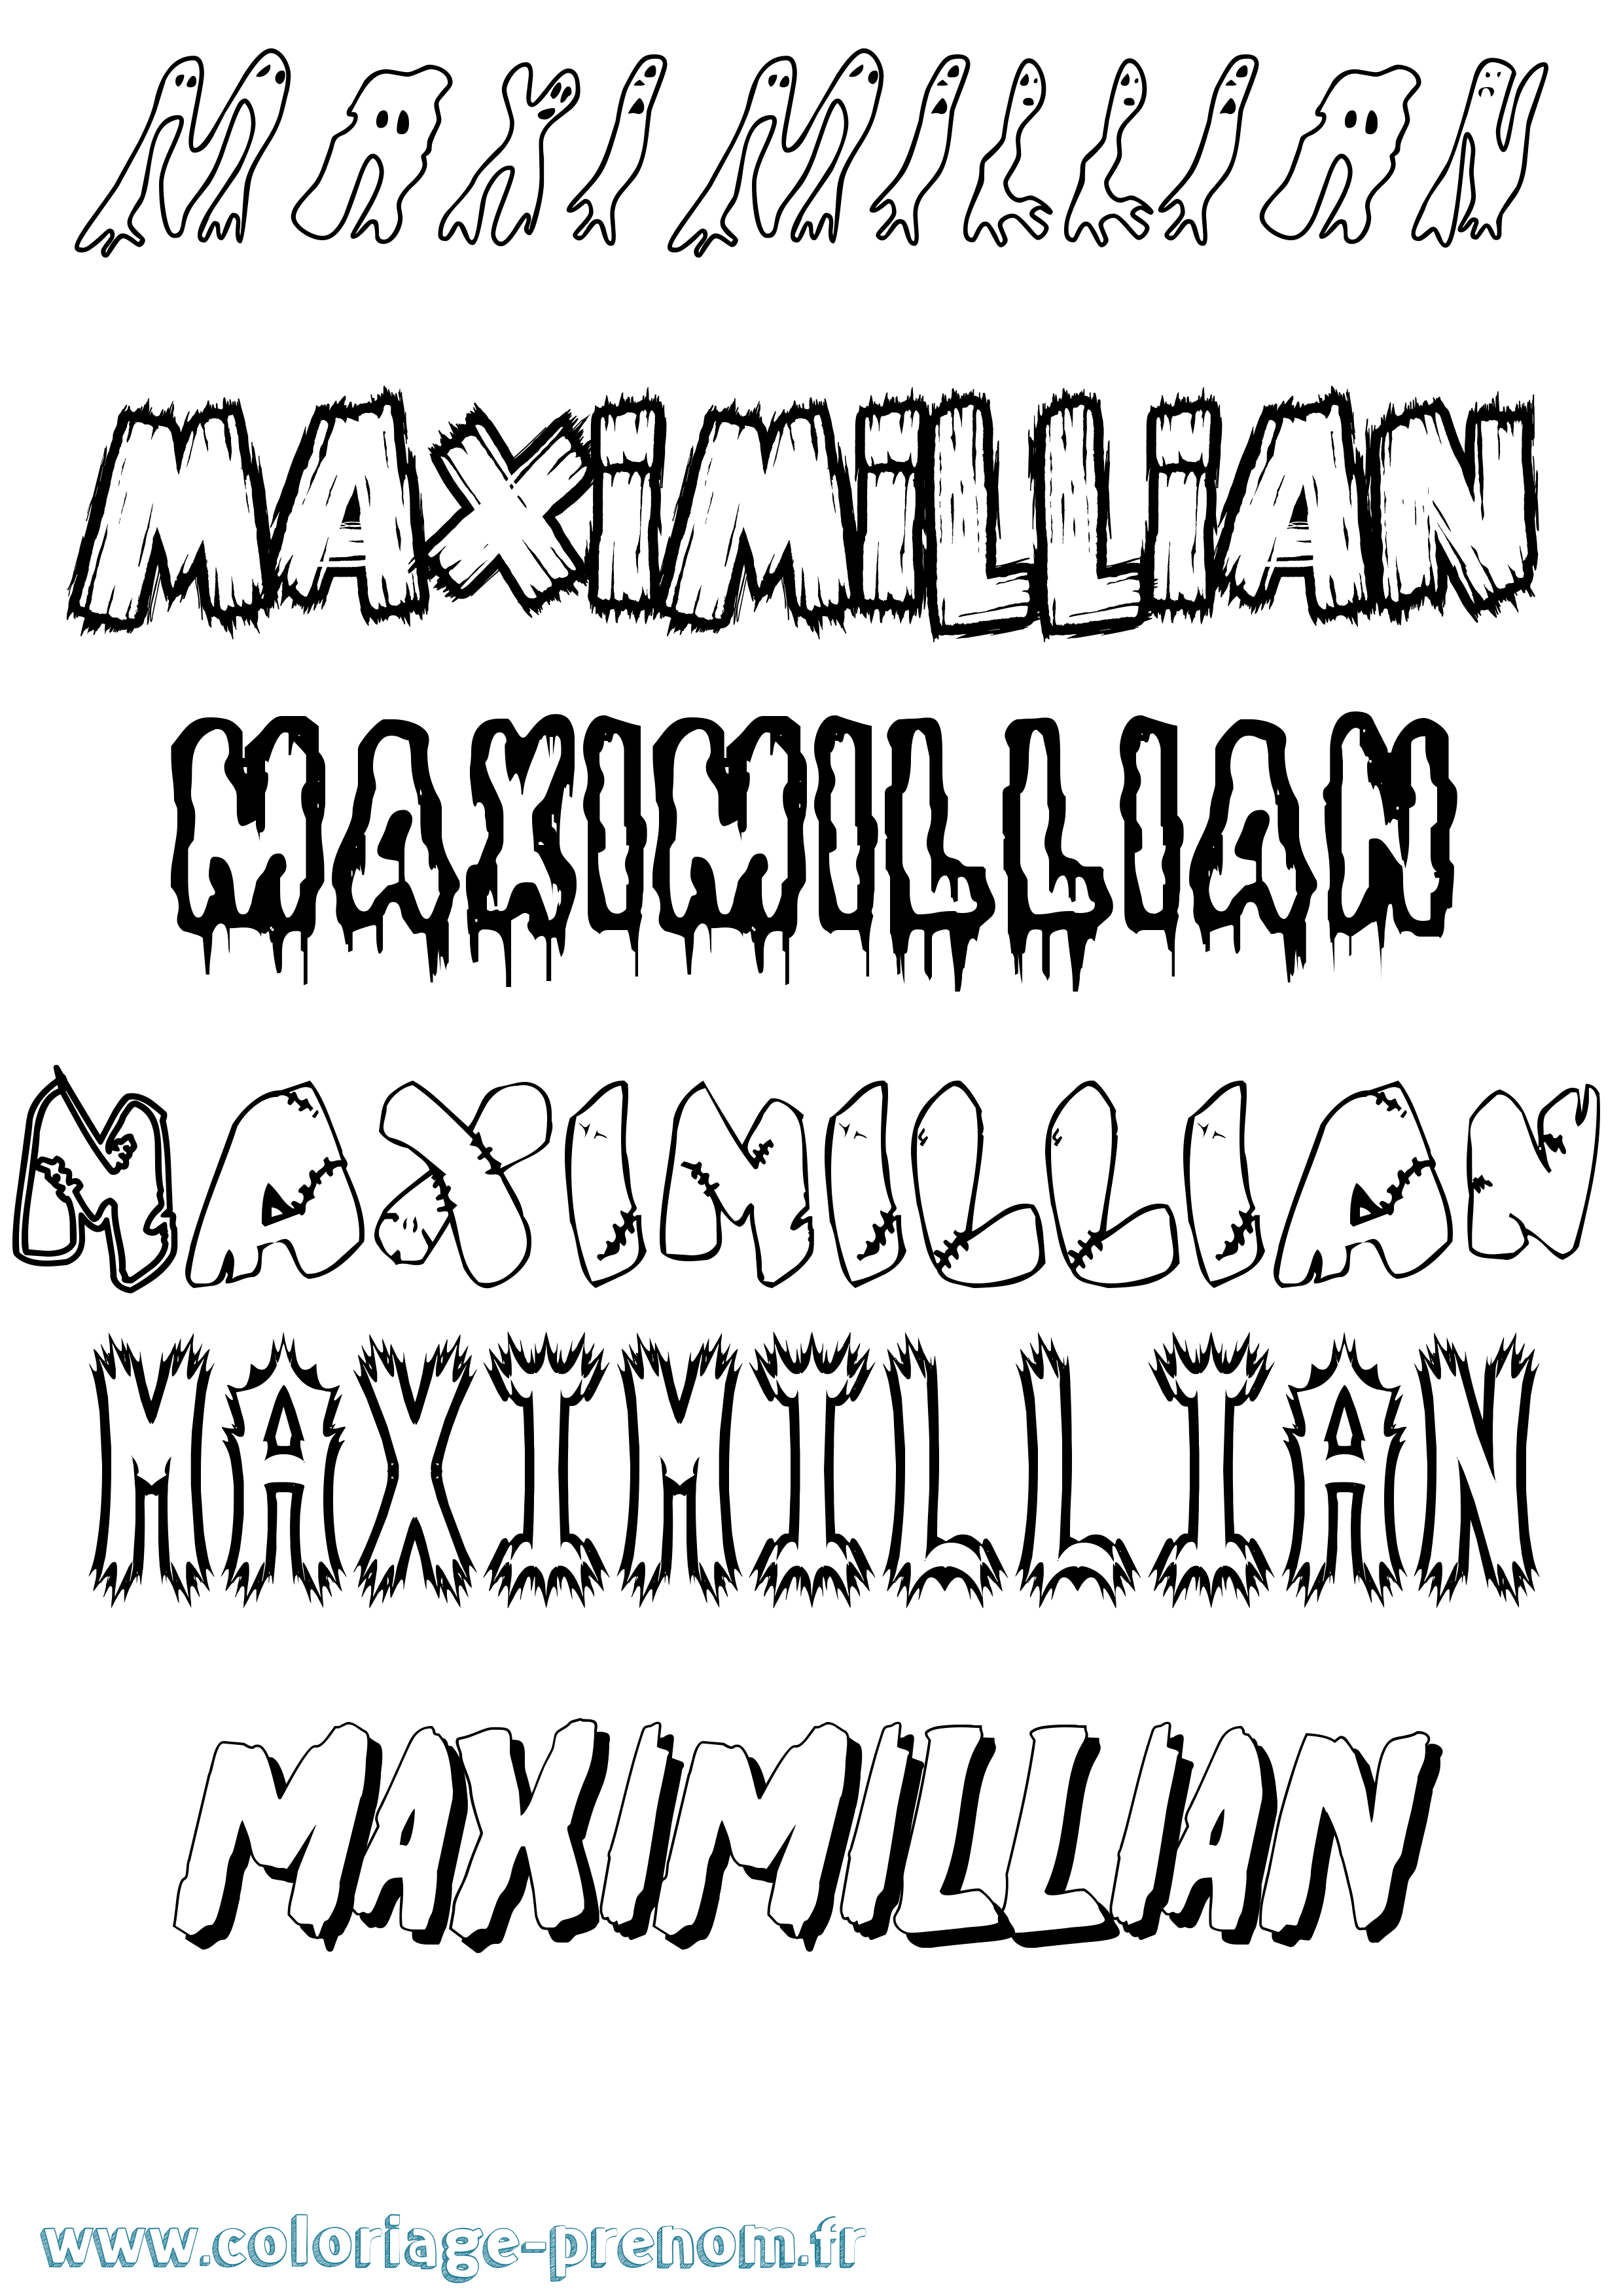 Coloriage prénom Maximillian Frisson